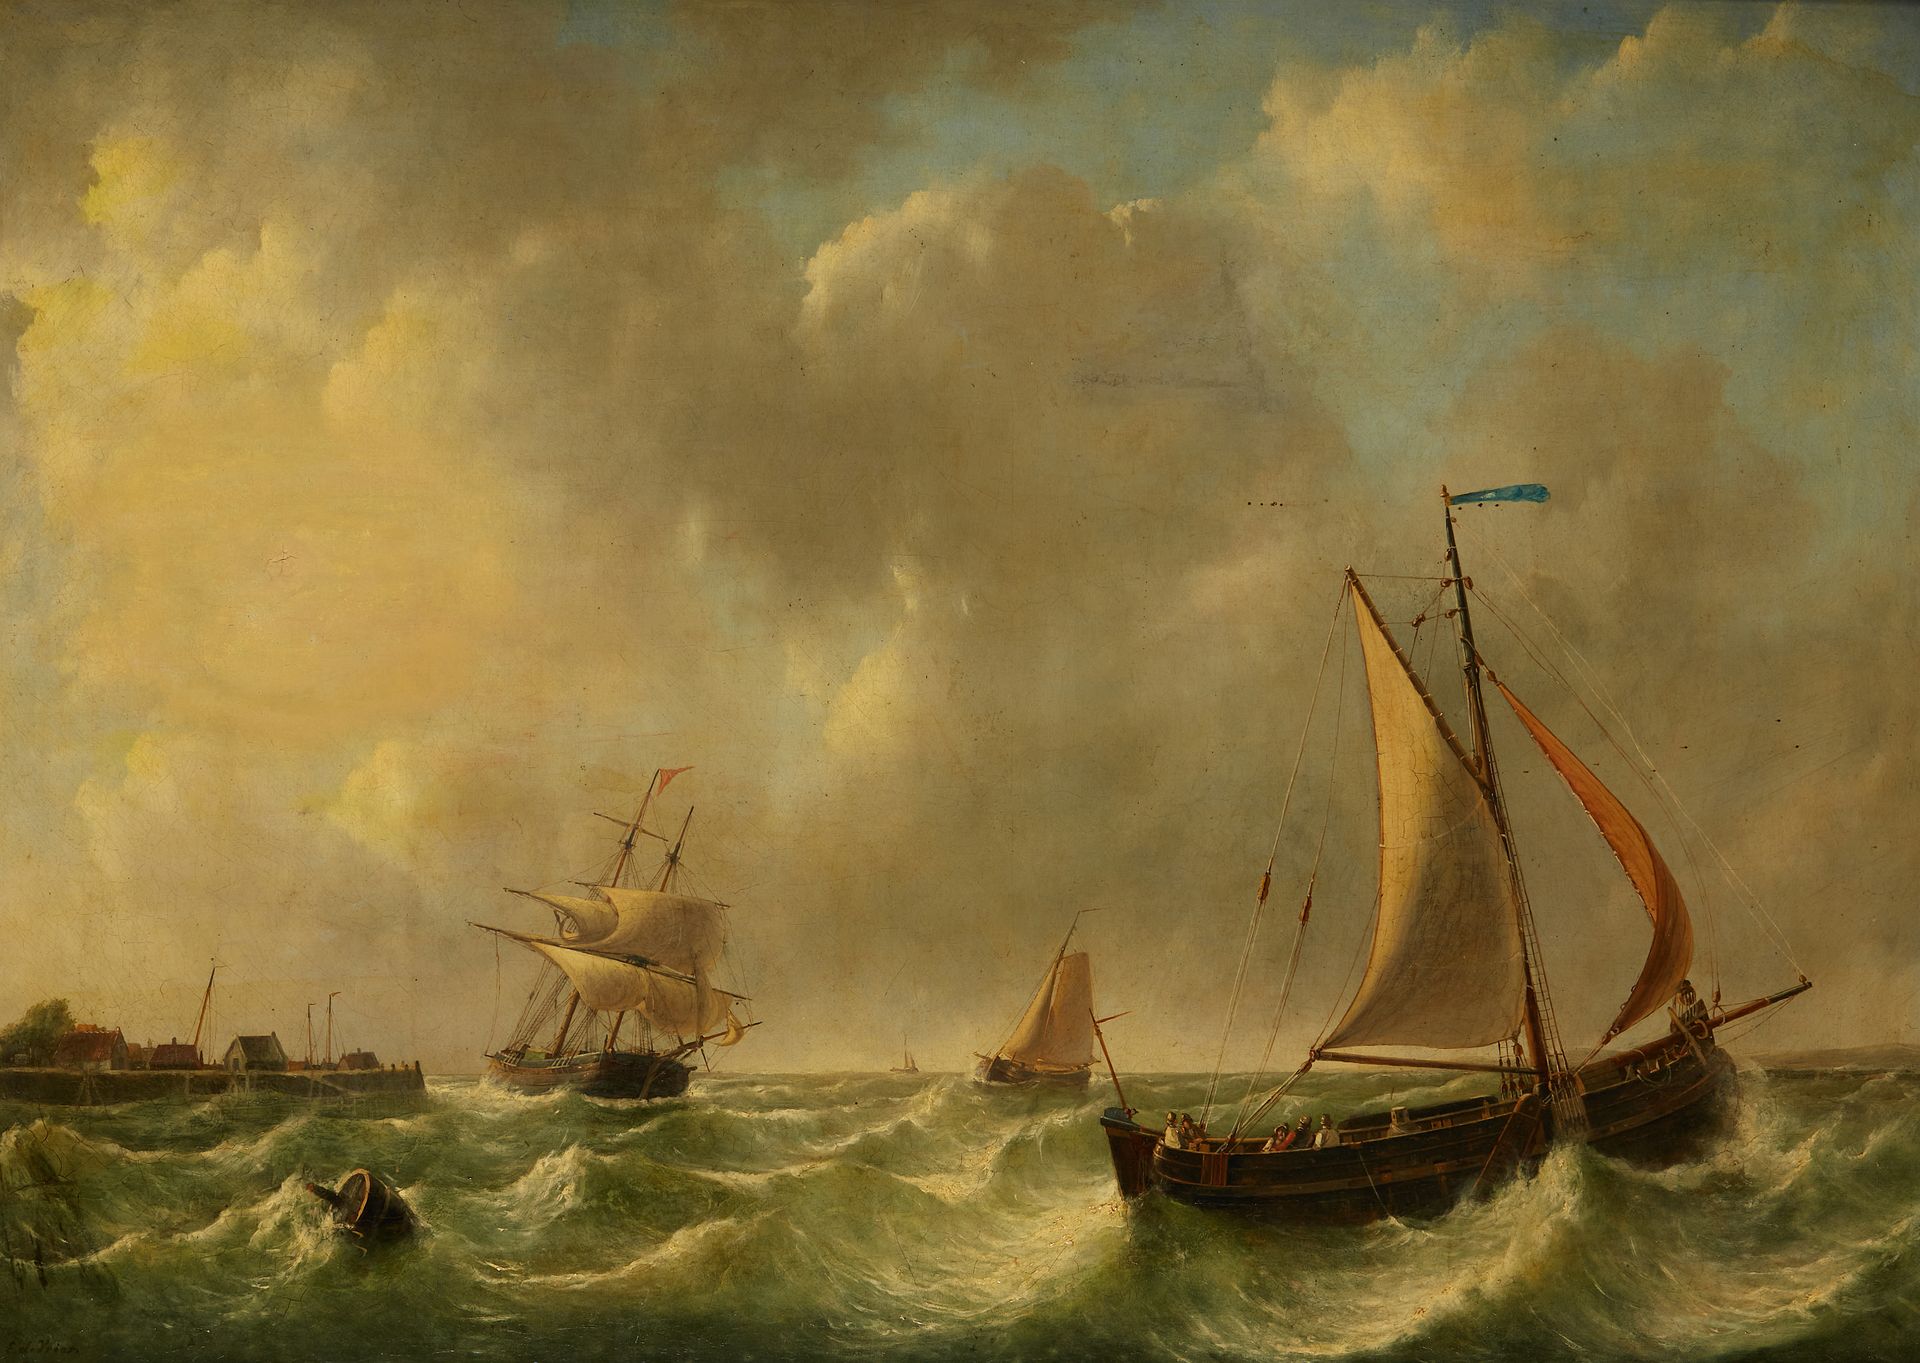 Null E.DE VRIES (19世纪)

海军

布面油画。

左下方有签名。

71 x 99厘米。